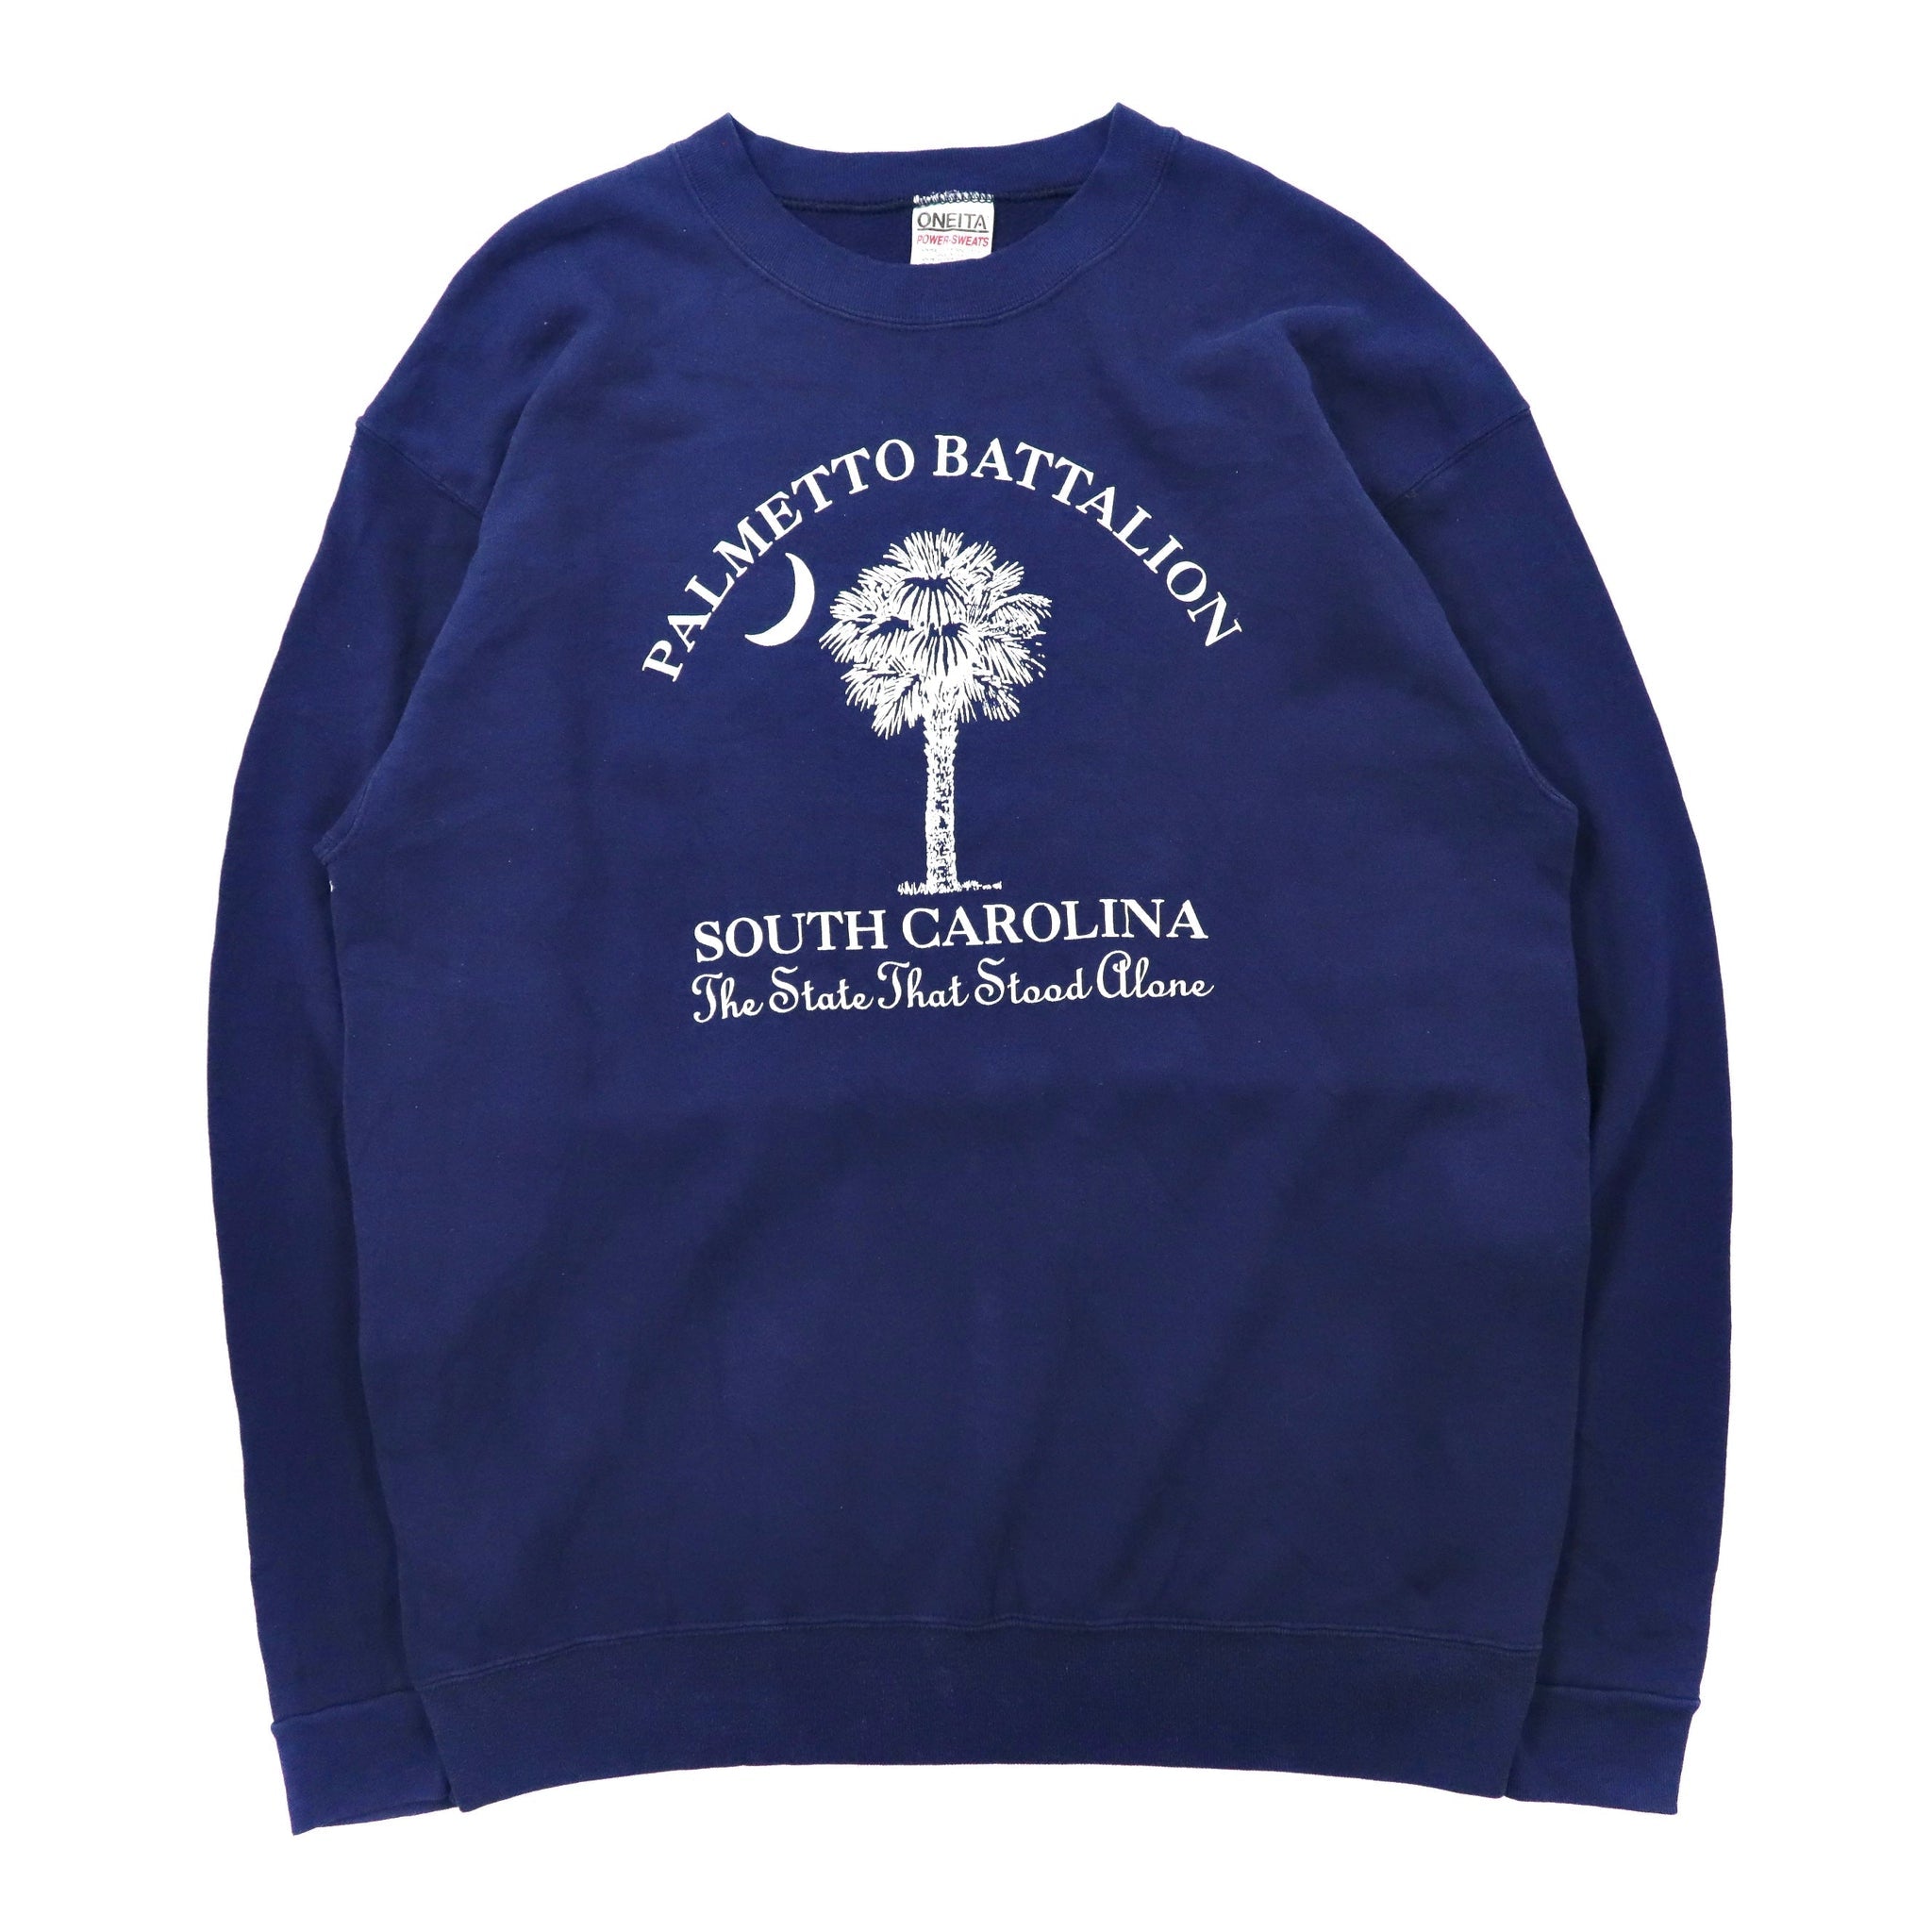 ONEITA Big Size Print Sweatshirt XL Navy Cotton PALMETTO BATTALION